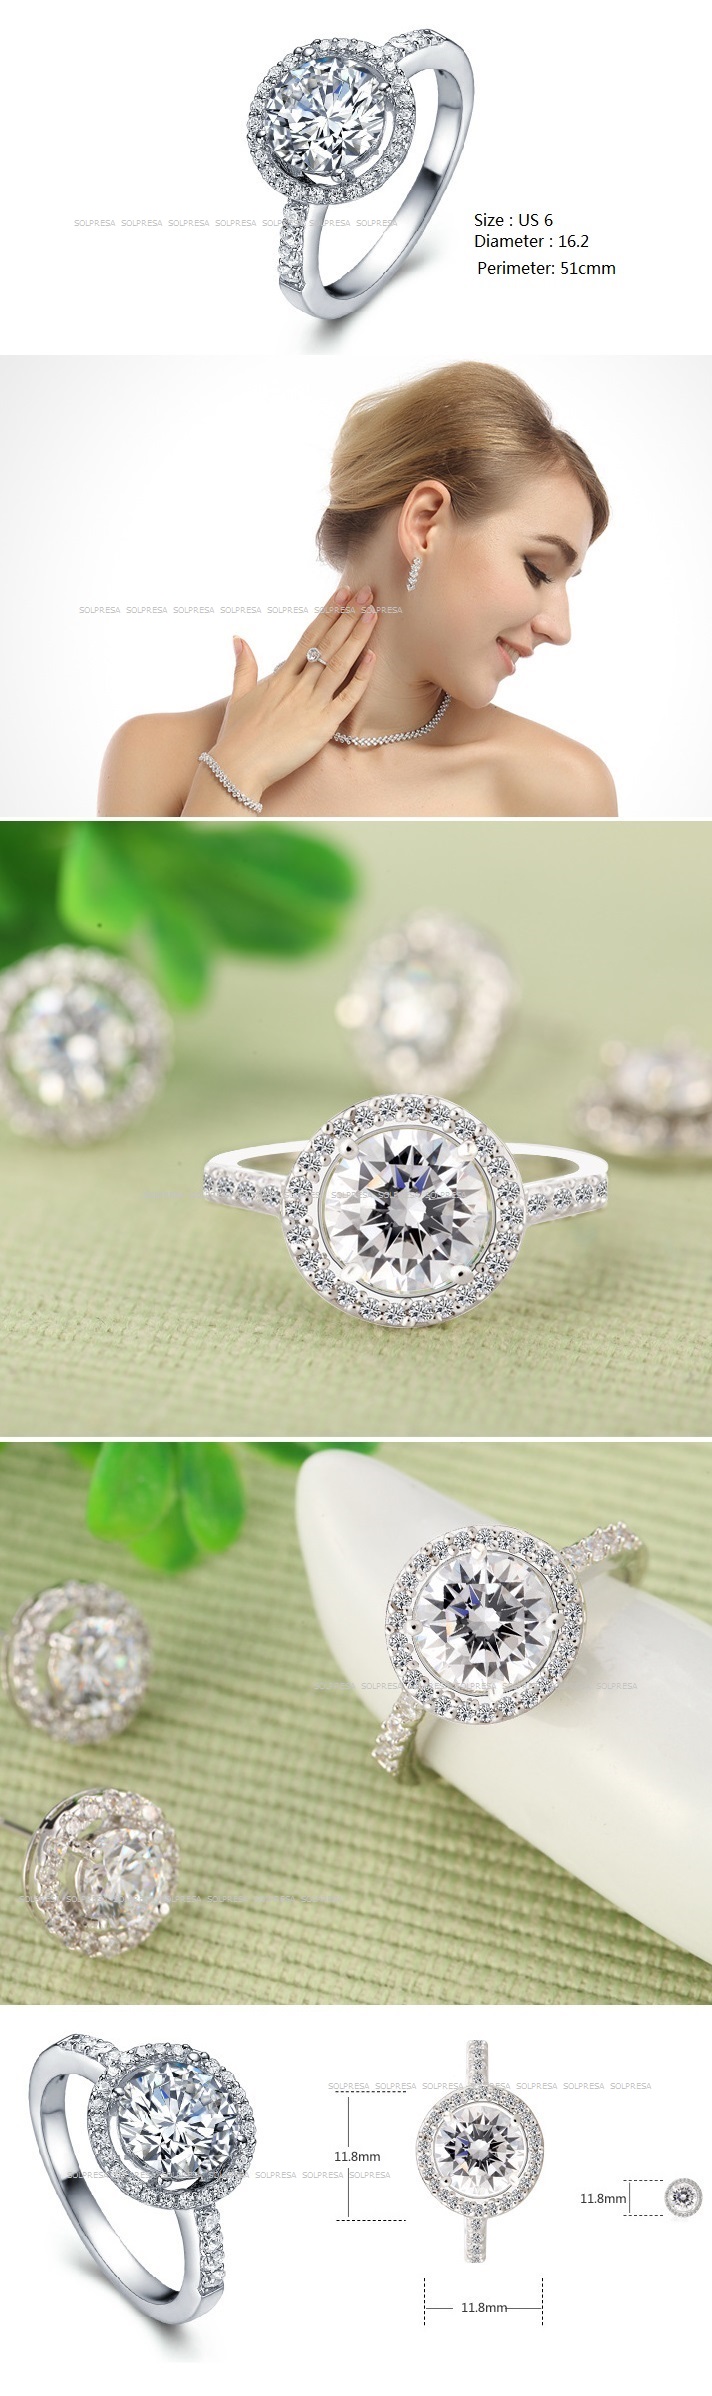 Solpresa Diamond Heart Super Flash Diamond Ring US6